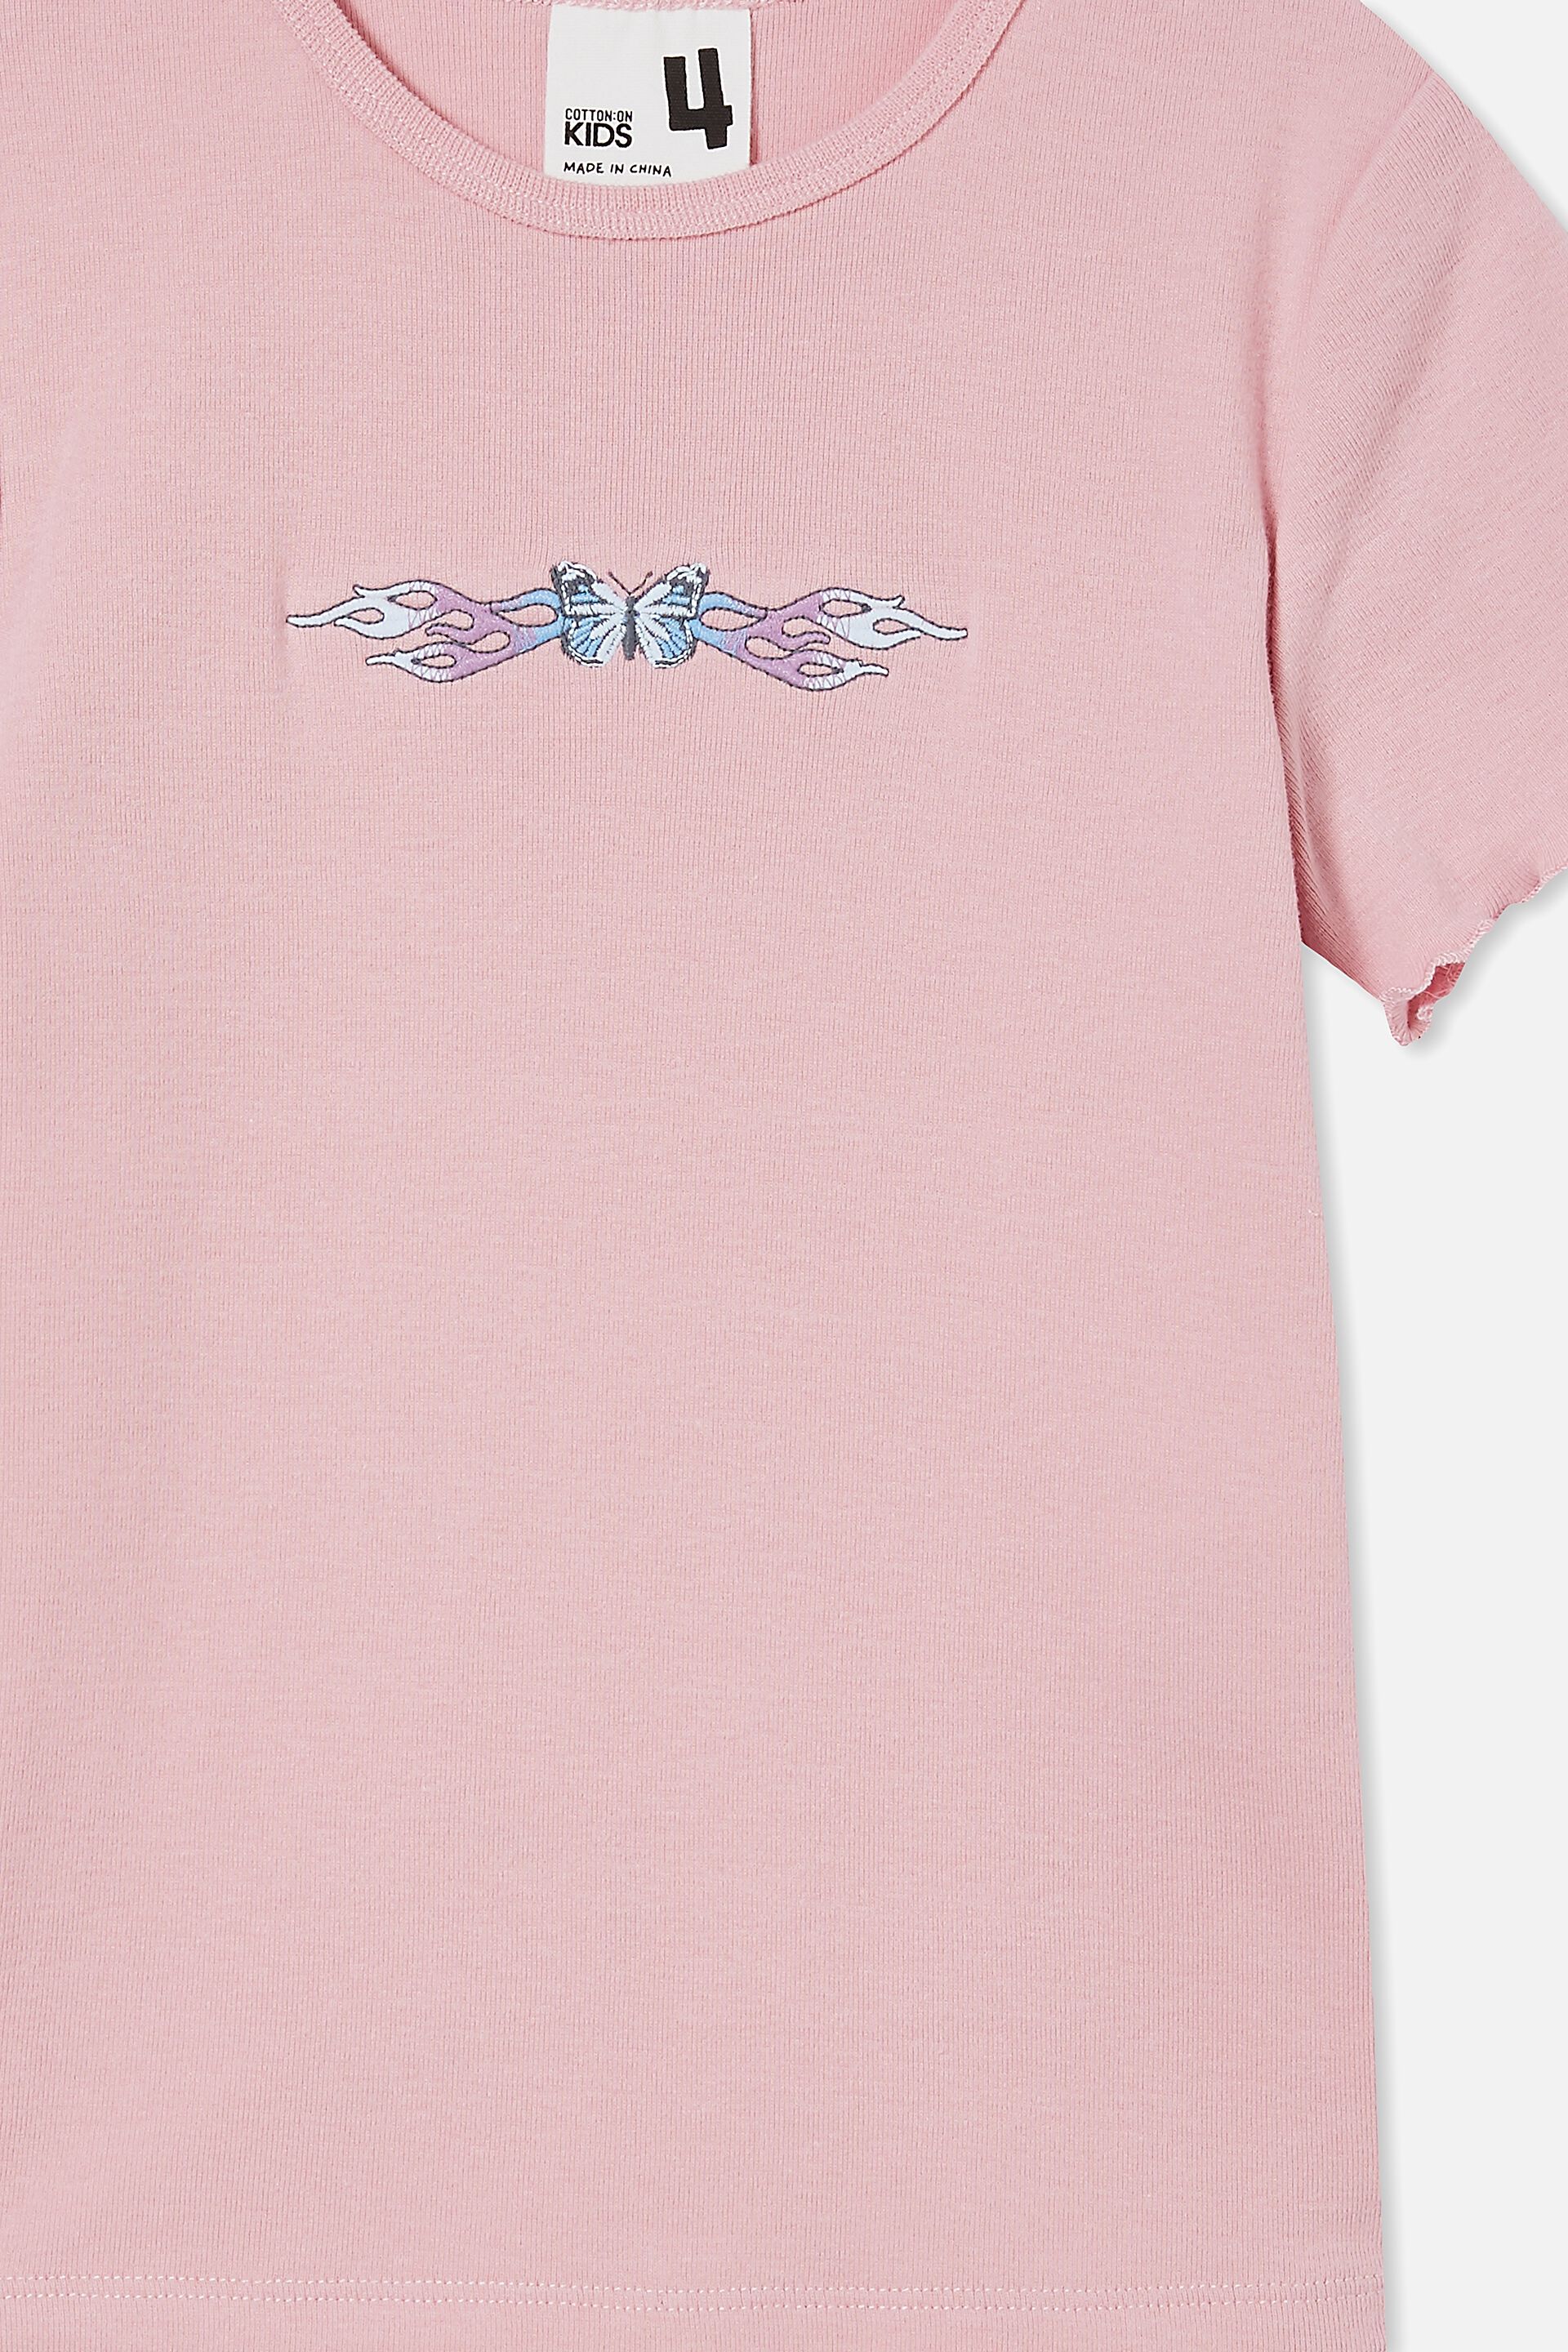 Girls 2-14 Tops & T-Shirts | Amelia Short Sleeve Top - DV05381